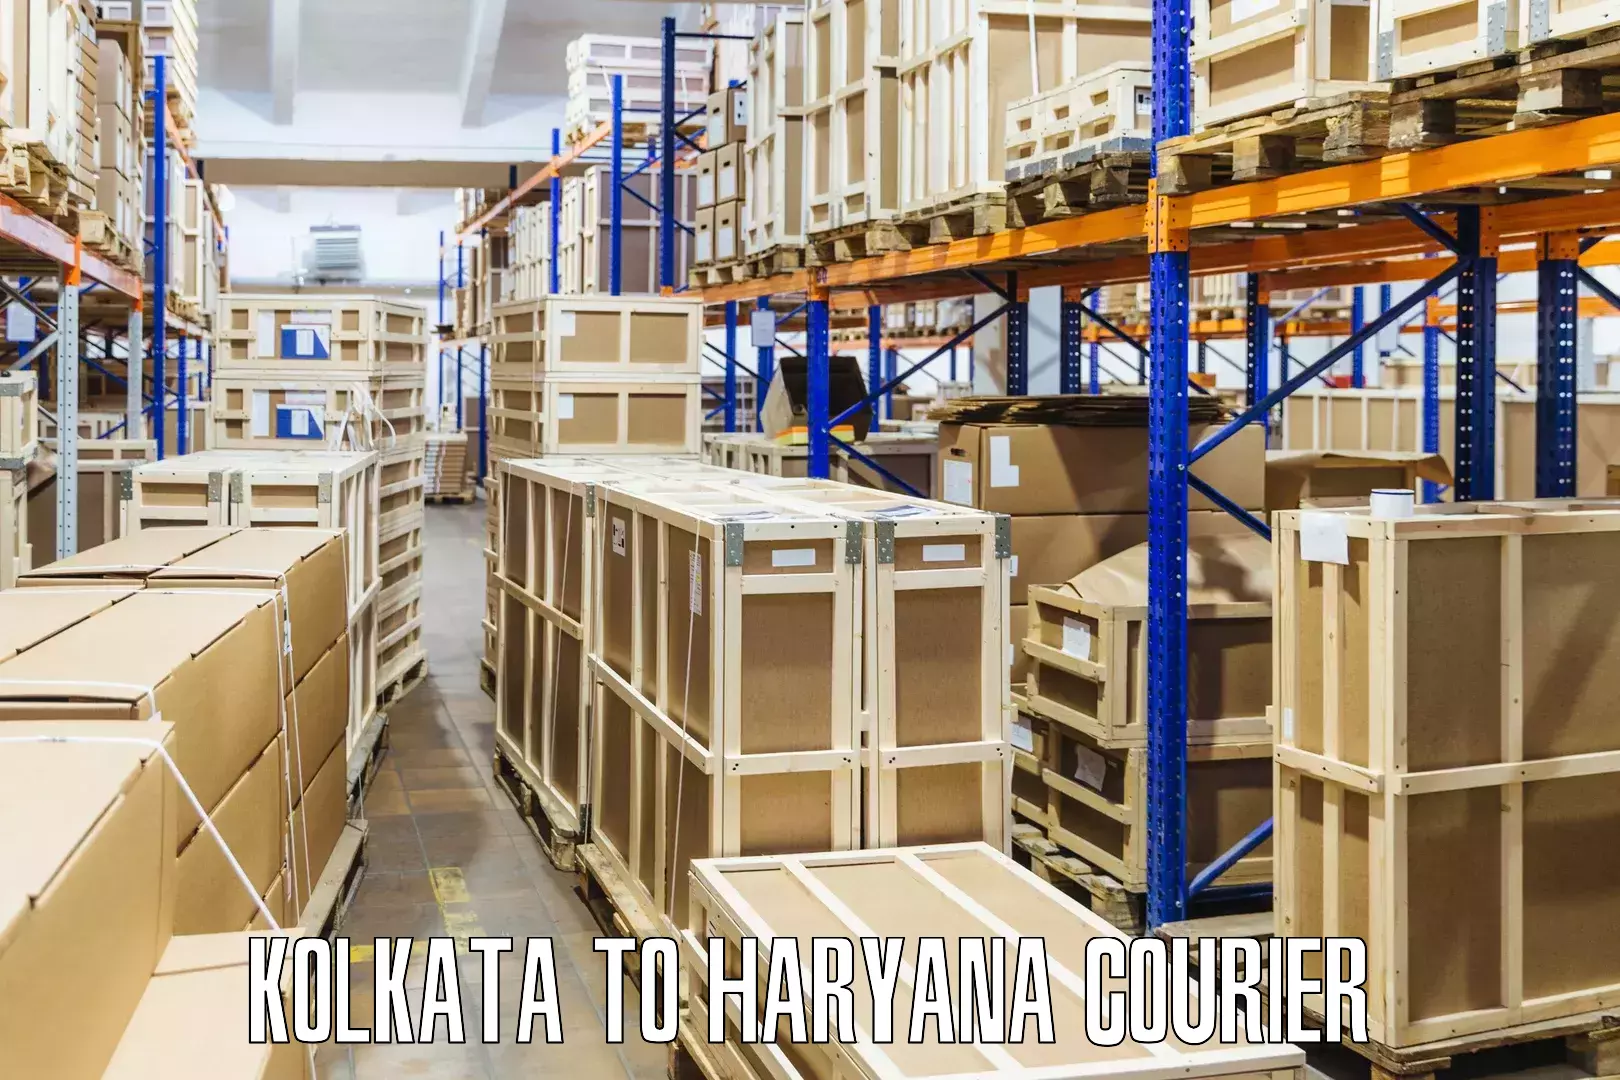 Courier service efficiency Kolkata to Gurugram